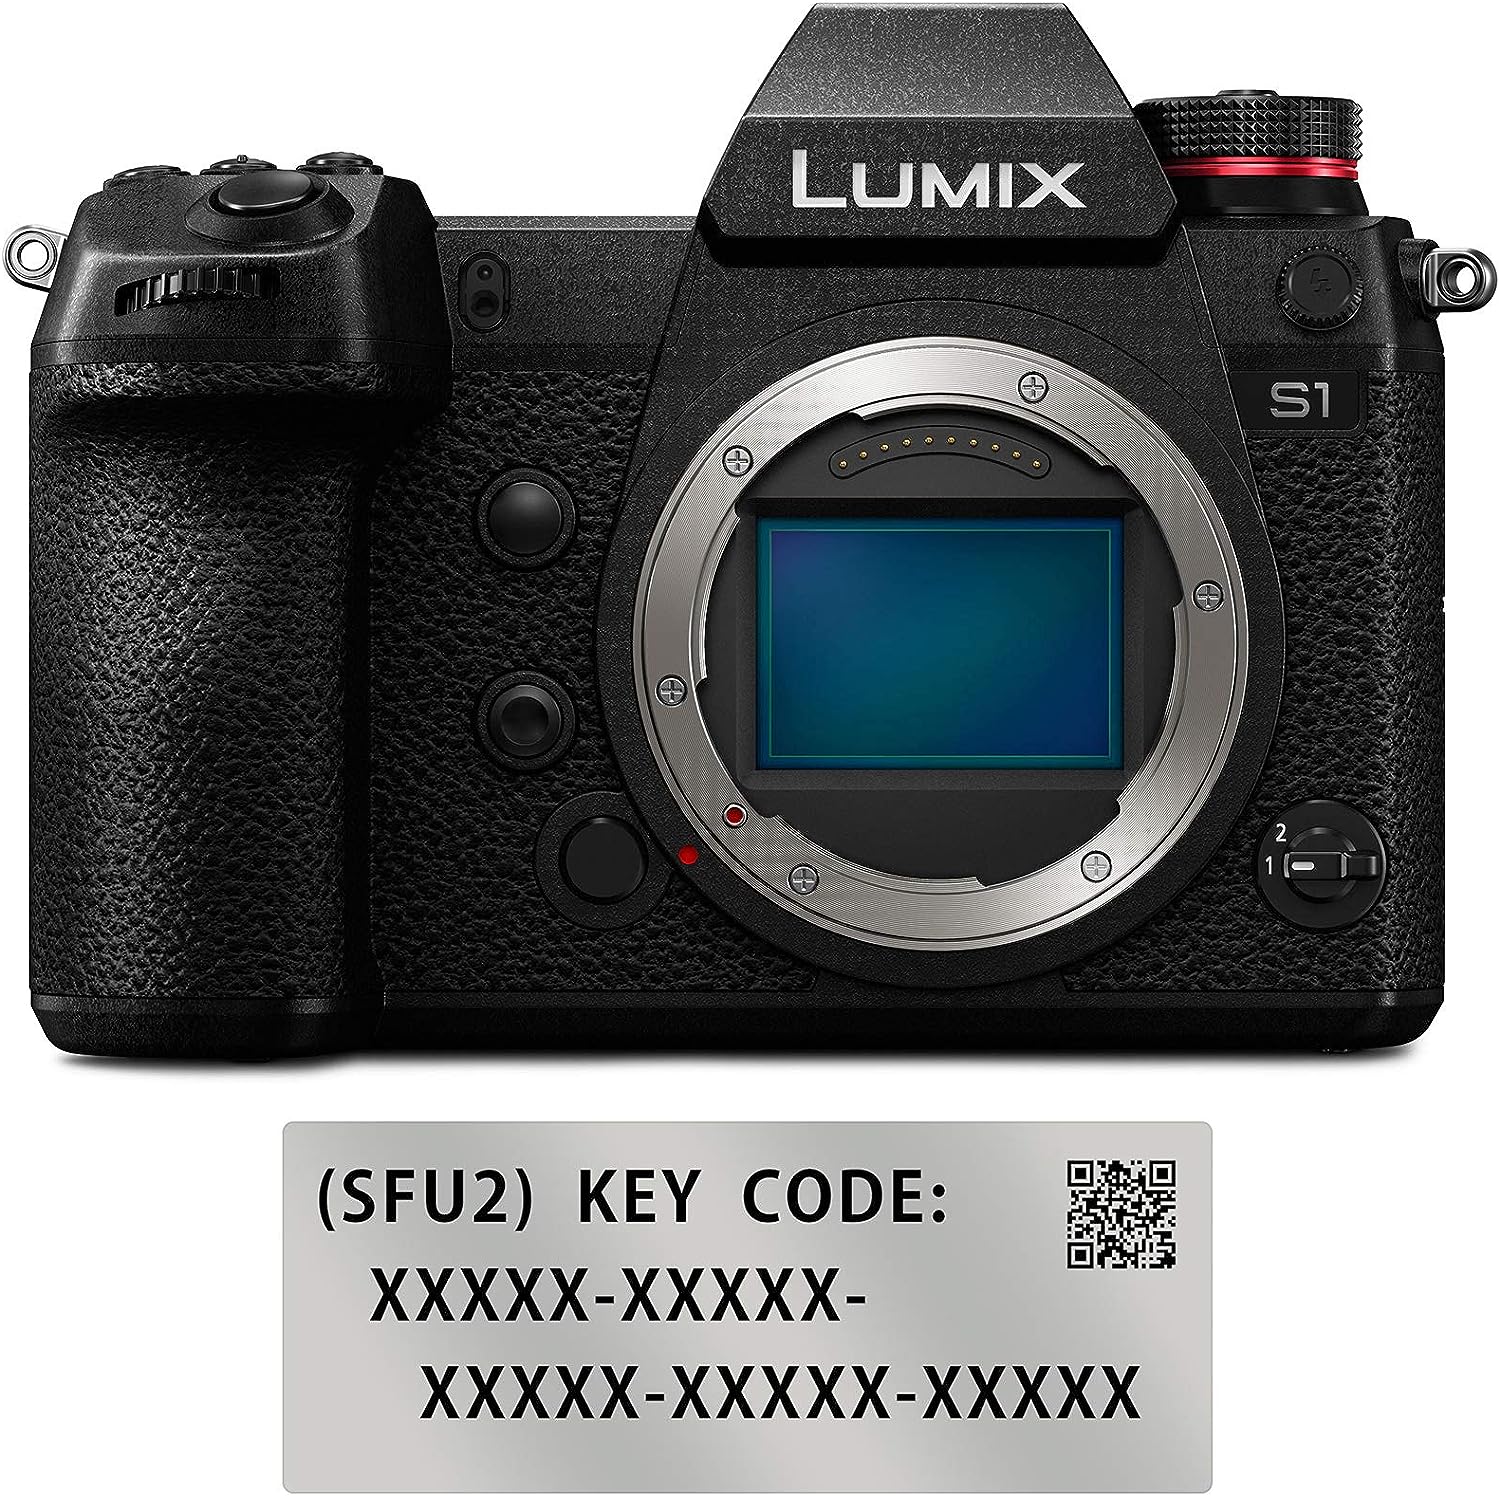 Panasonic Lumix DC-S1 Full-Frame Mirrorless Digital Camera Body with DMW-SFU2 S1 Filmmaker Upgrade Software Key Code